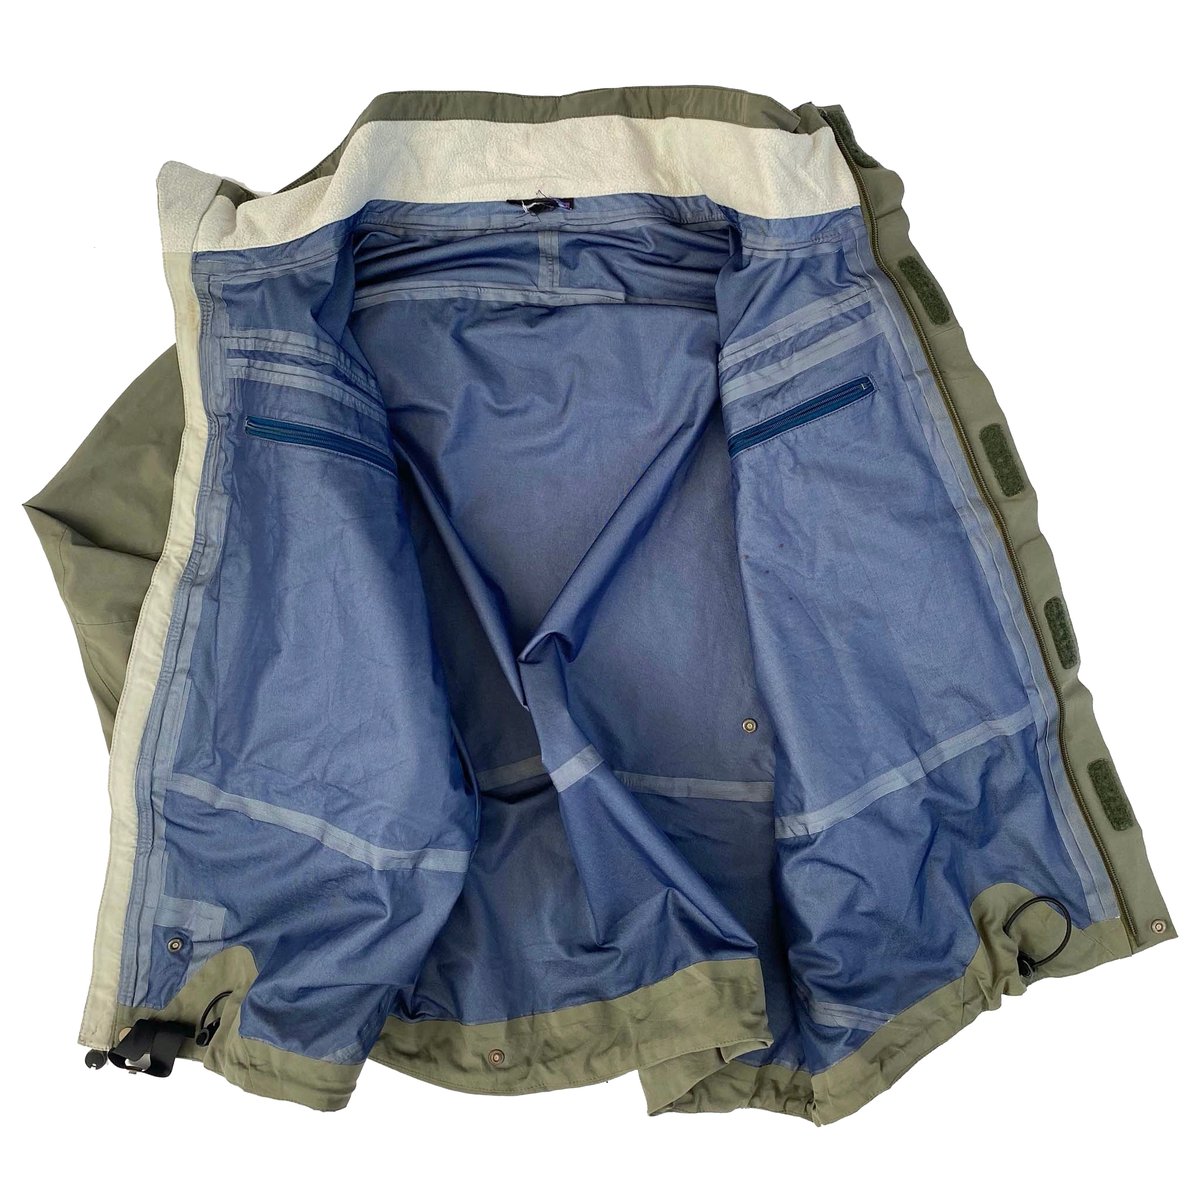 Patagonia SST fishing jacket - Early 2000s, Fesyen Pria, Pakaian , Atasan  di Carousell